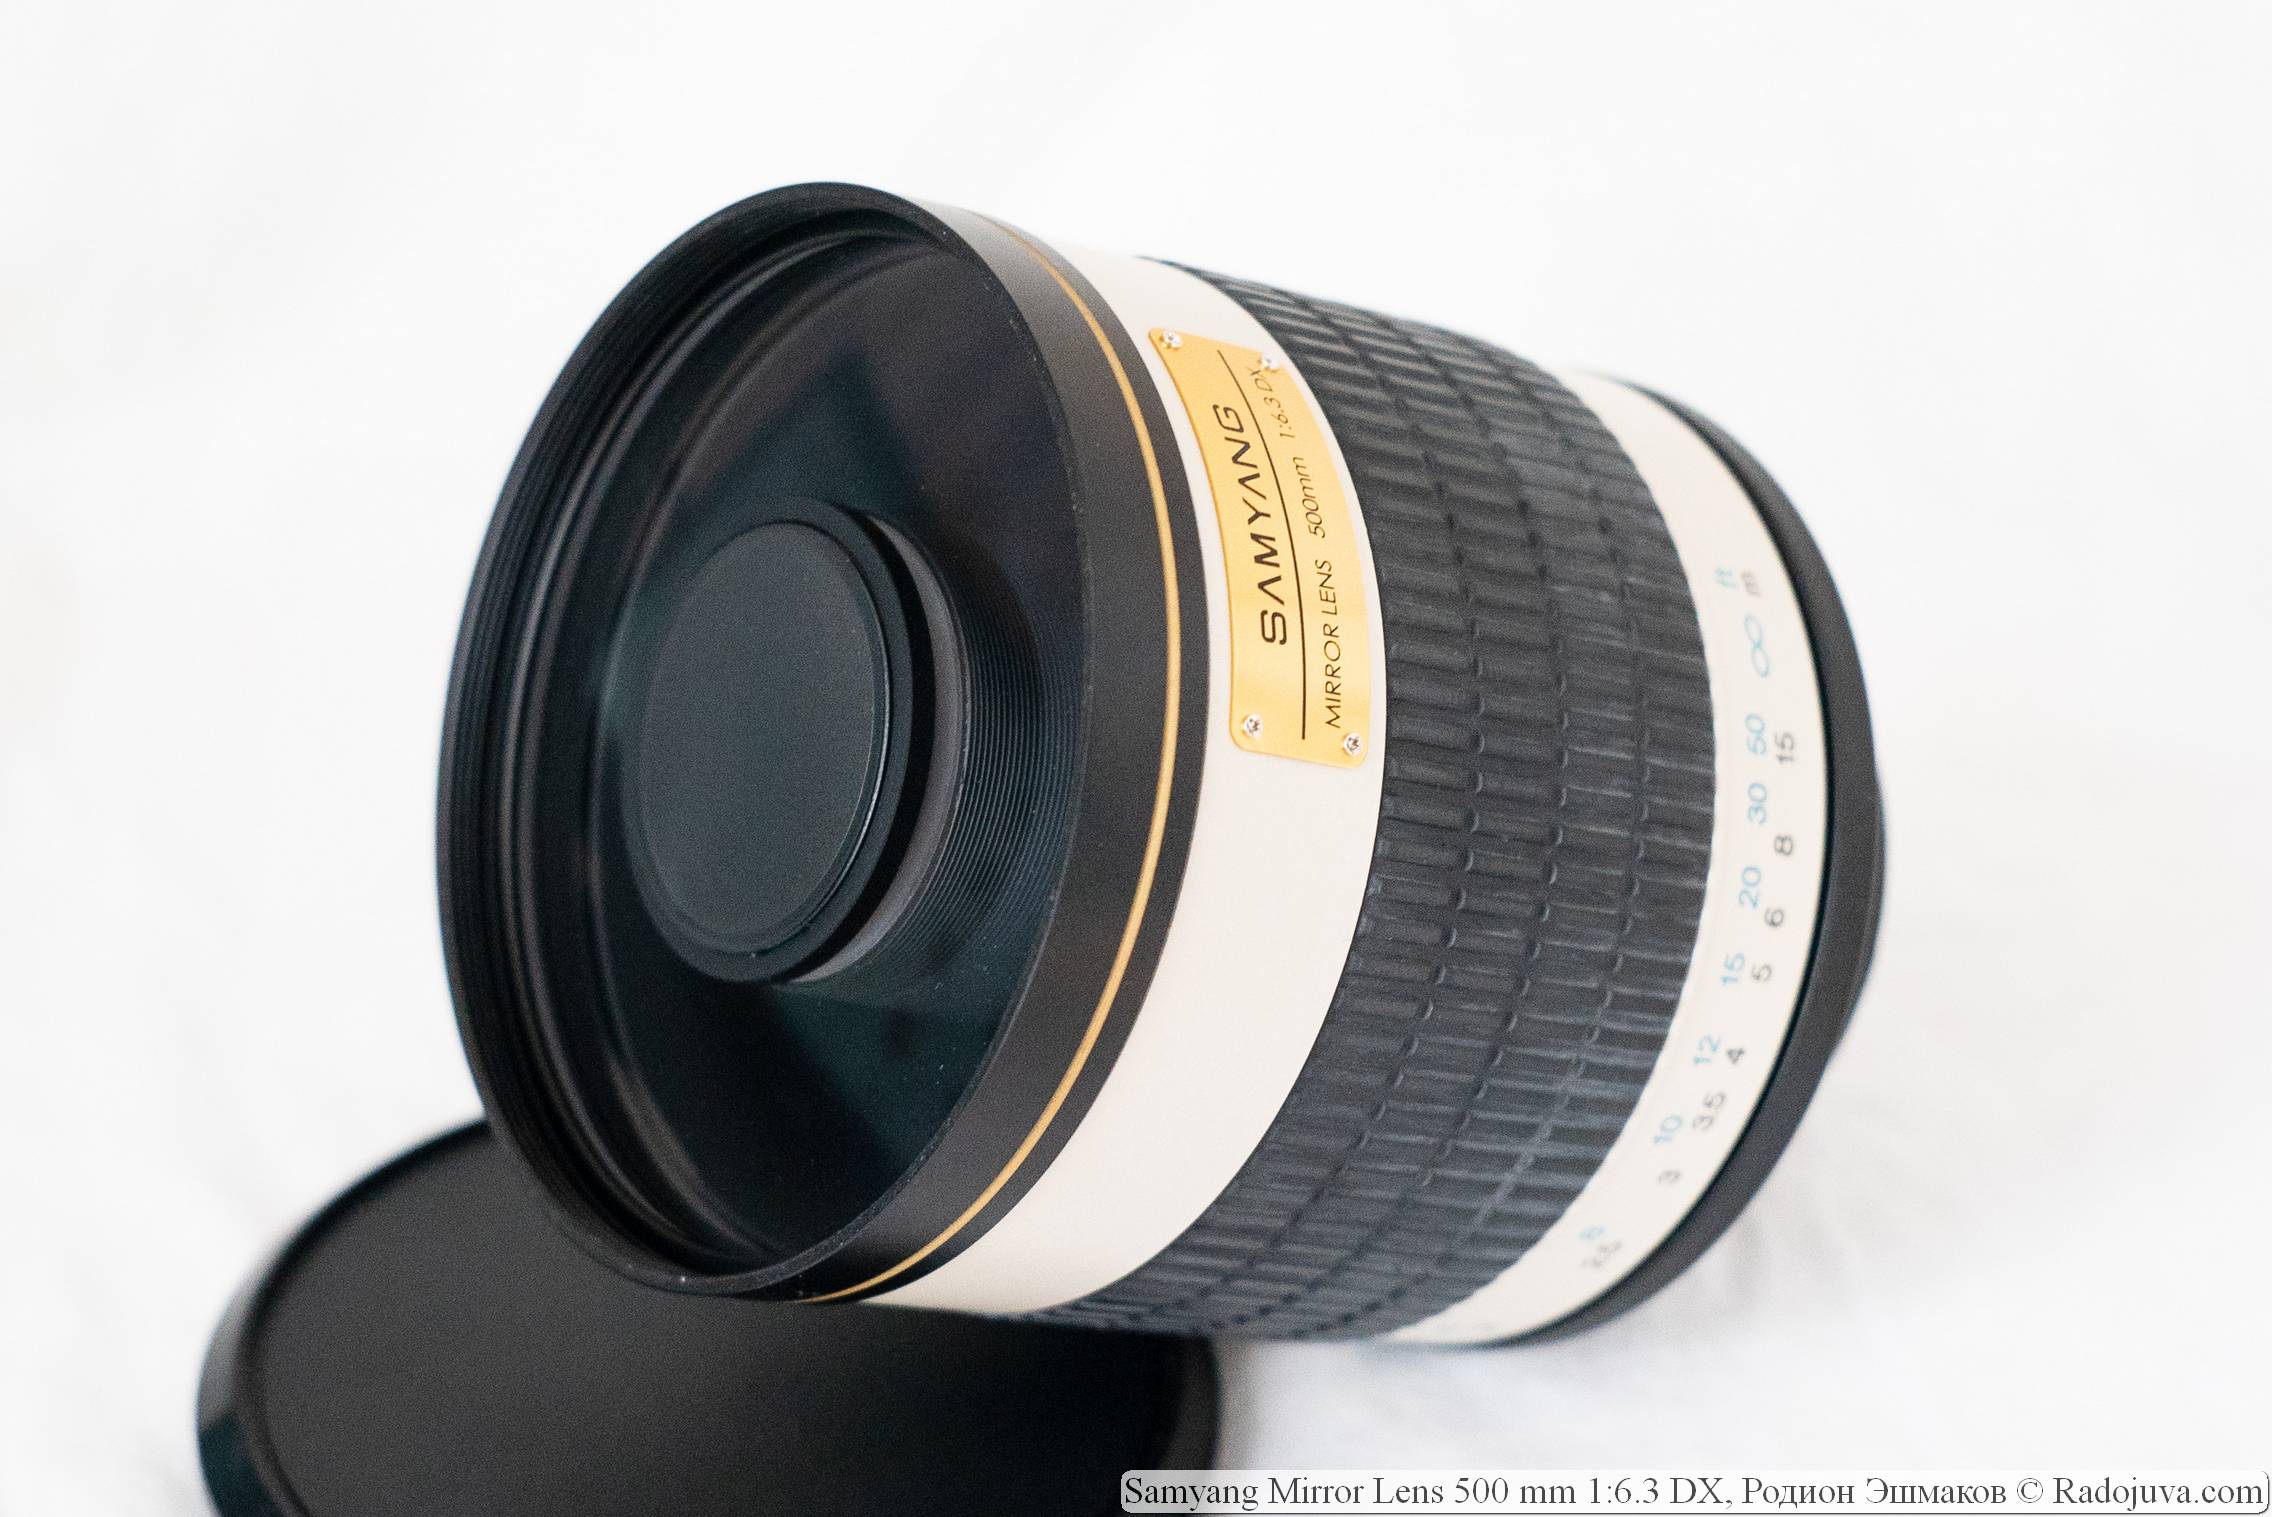 Samyang Mirror Lens 500 mm 1:6.3 DX. Comparison with Rubinar 500